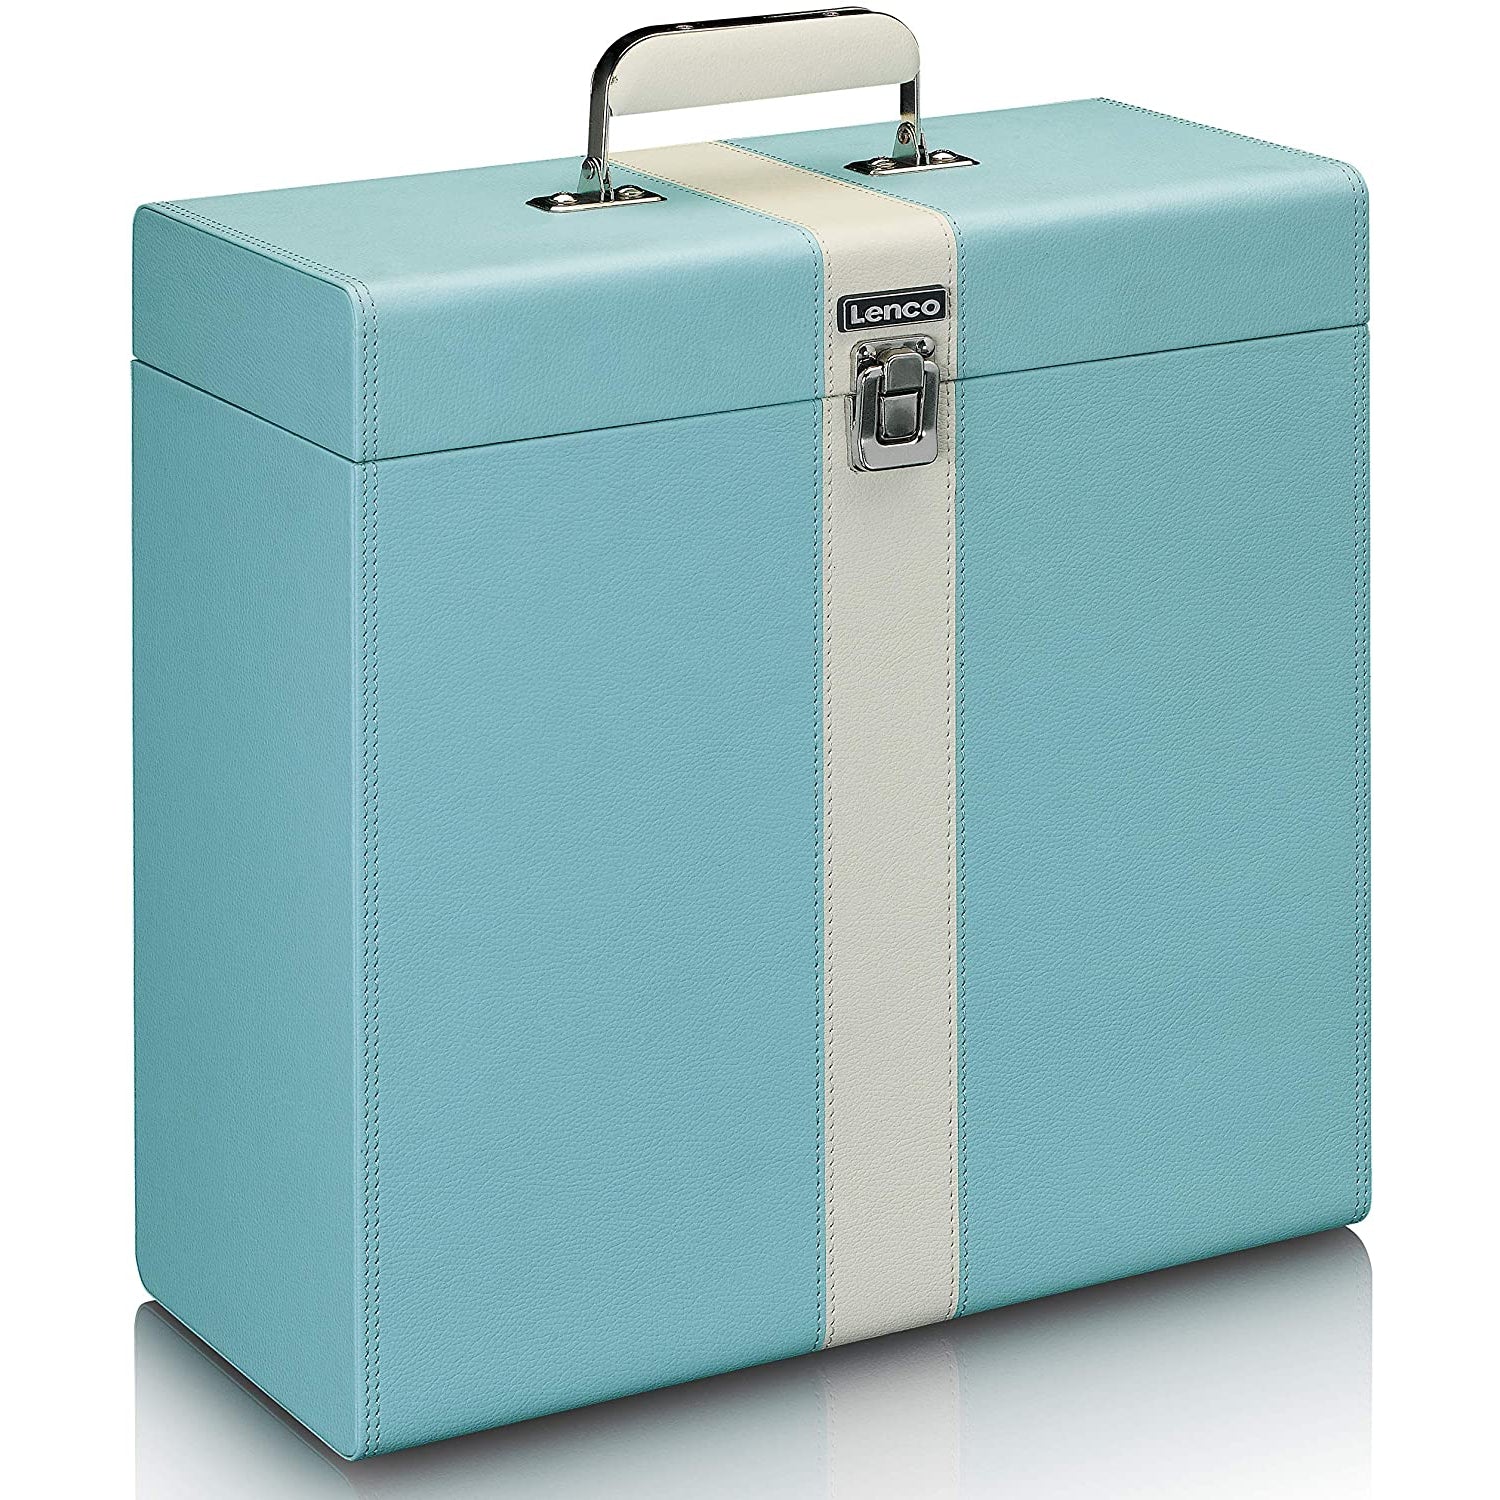 Lenco TTA-300 Record Storage Suitcase - Light Blue / Brown